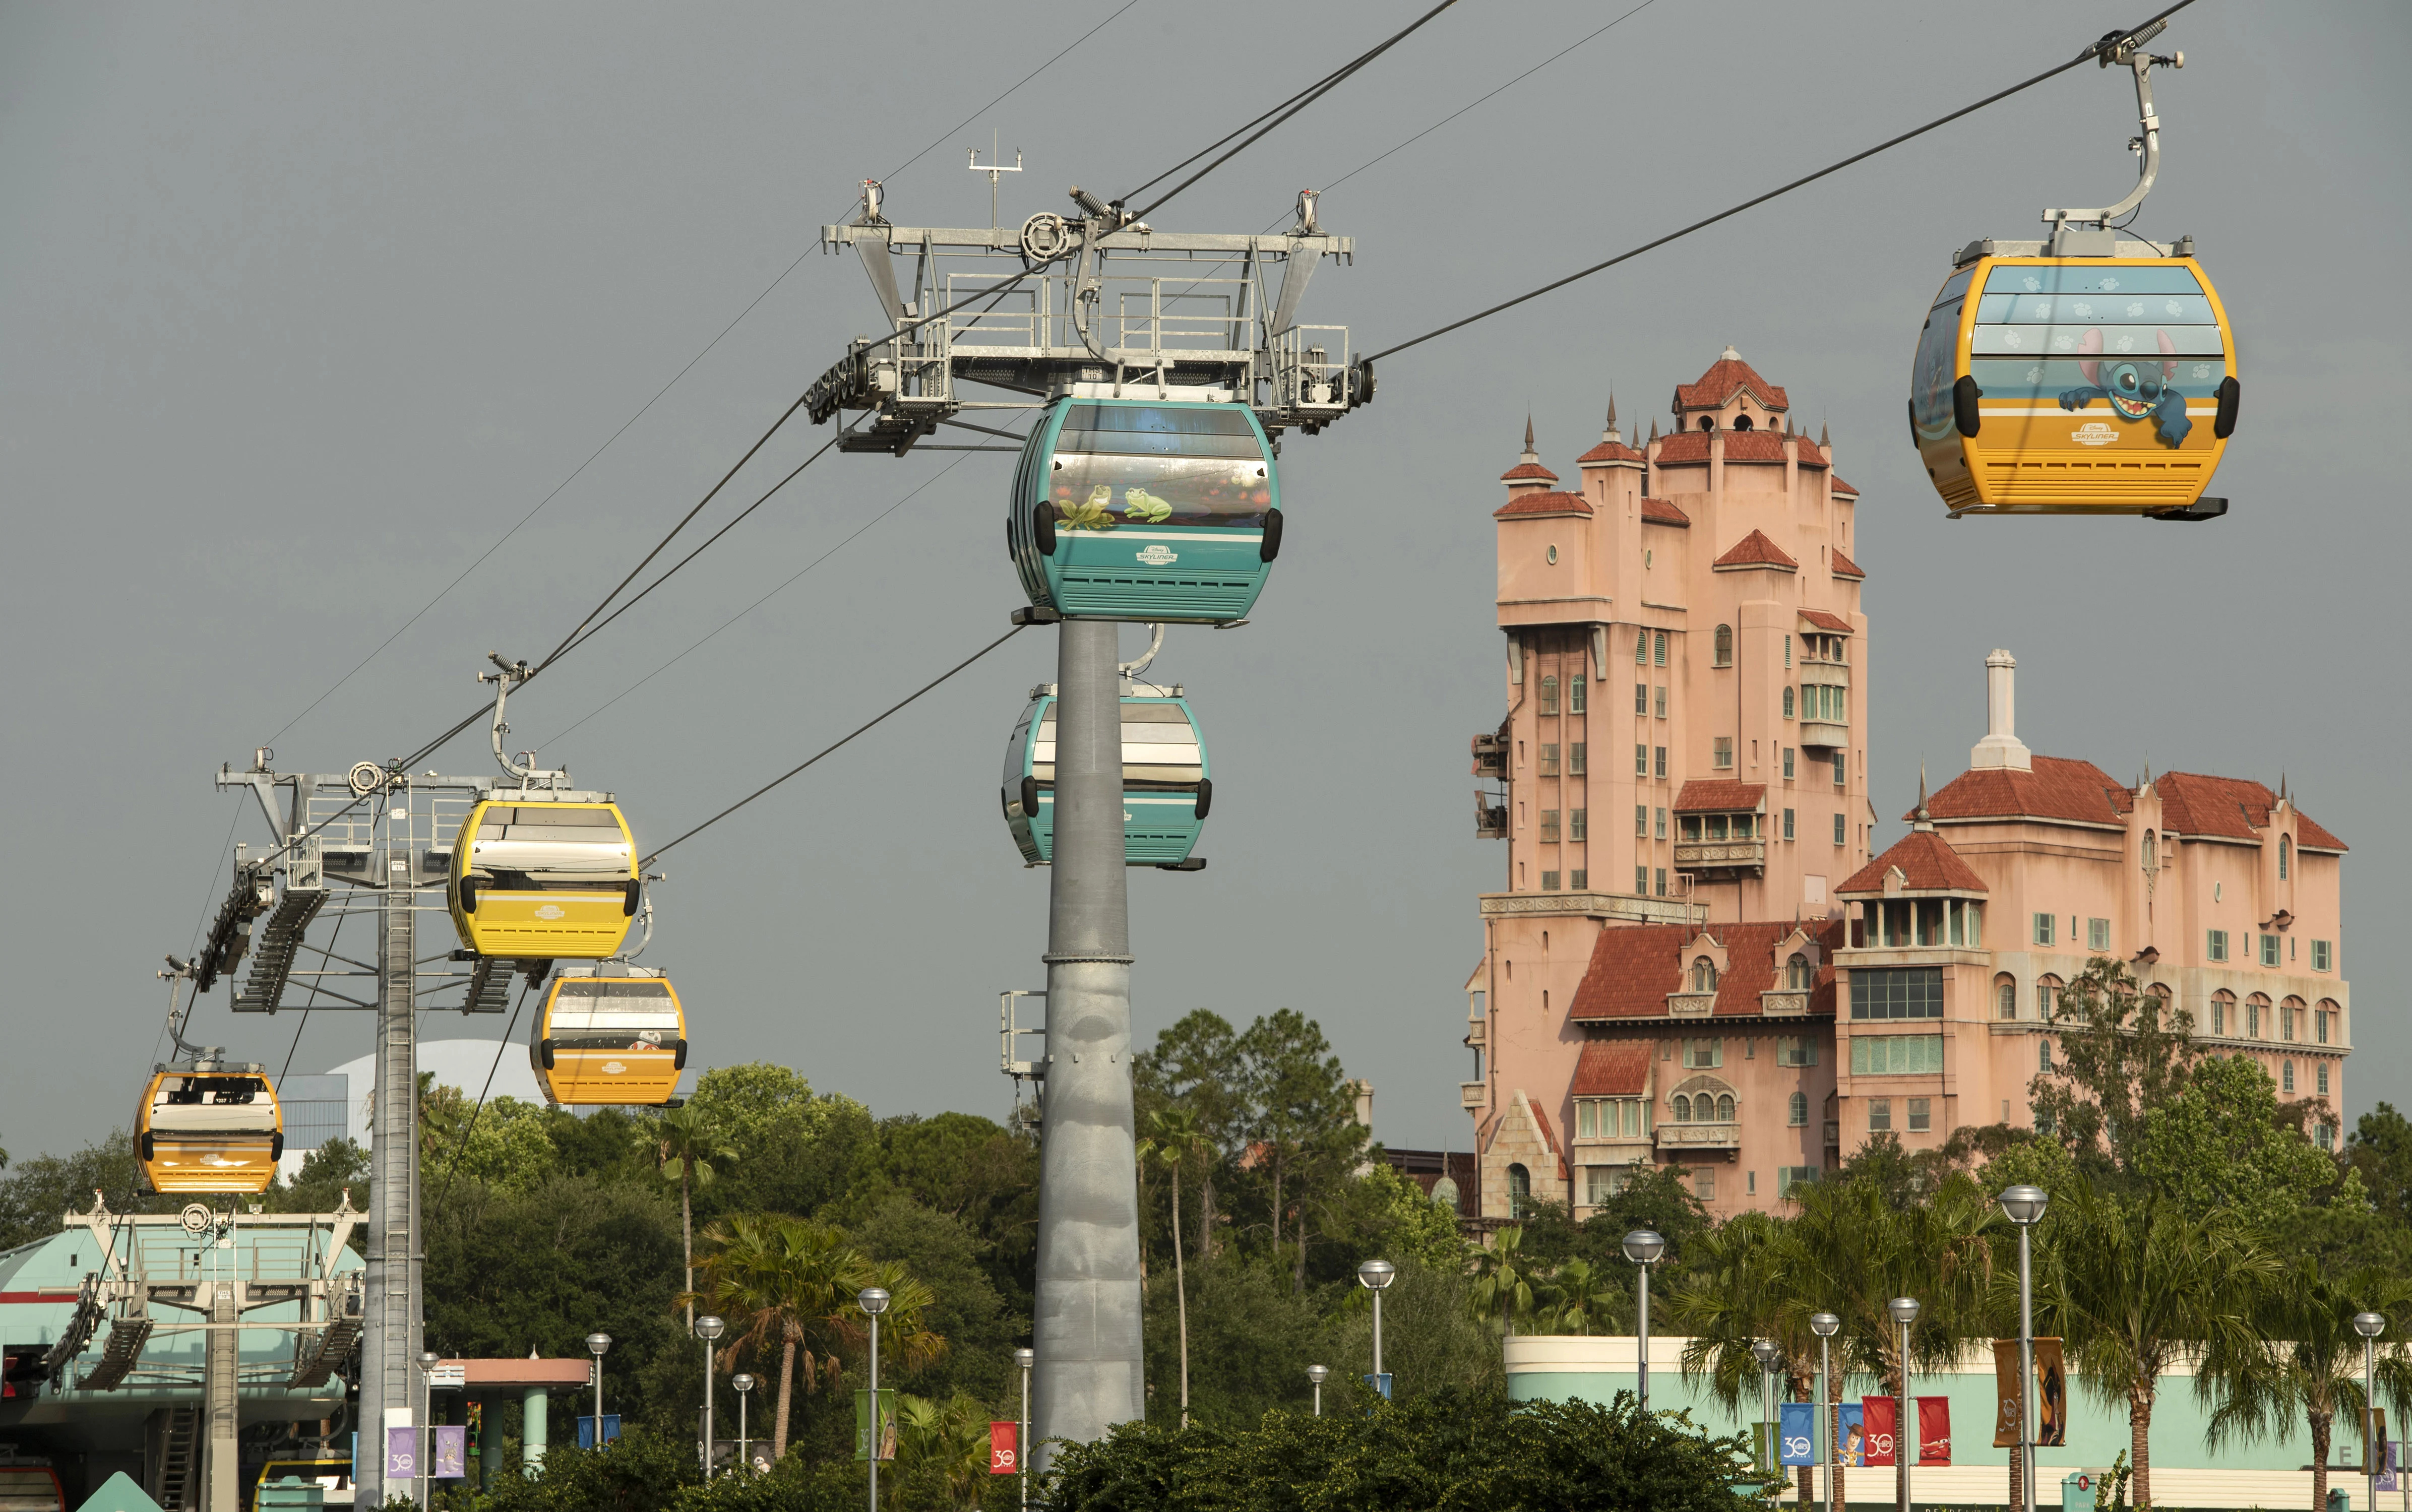 Disney Skyliner Gondolas